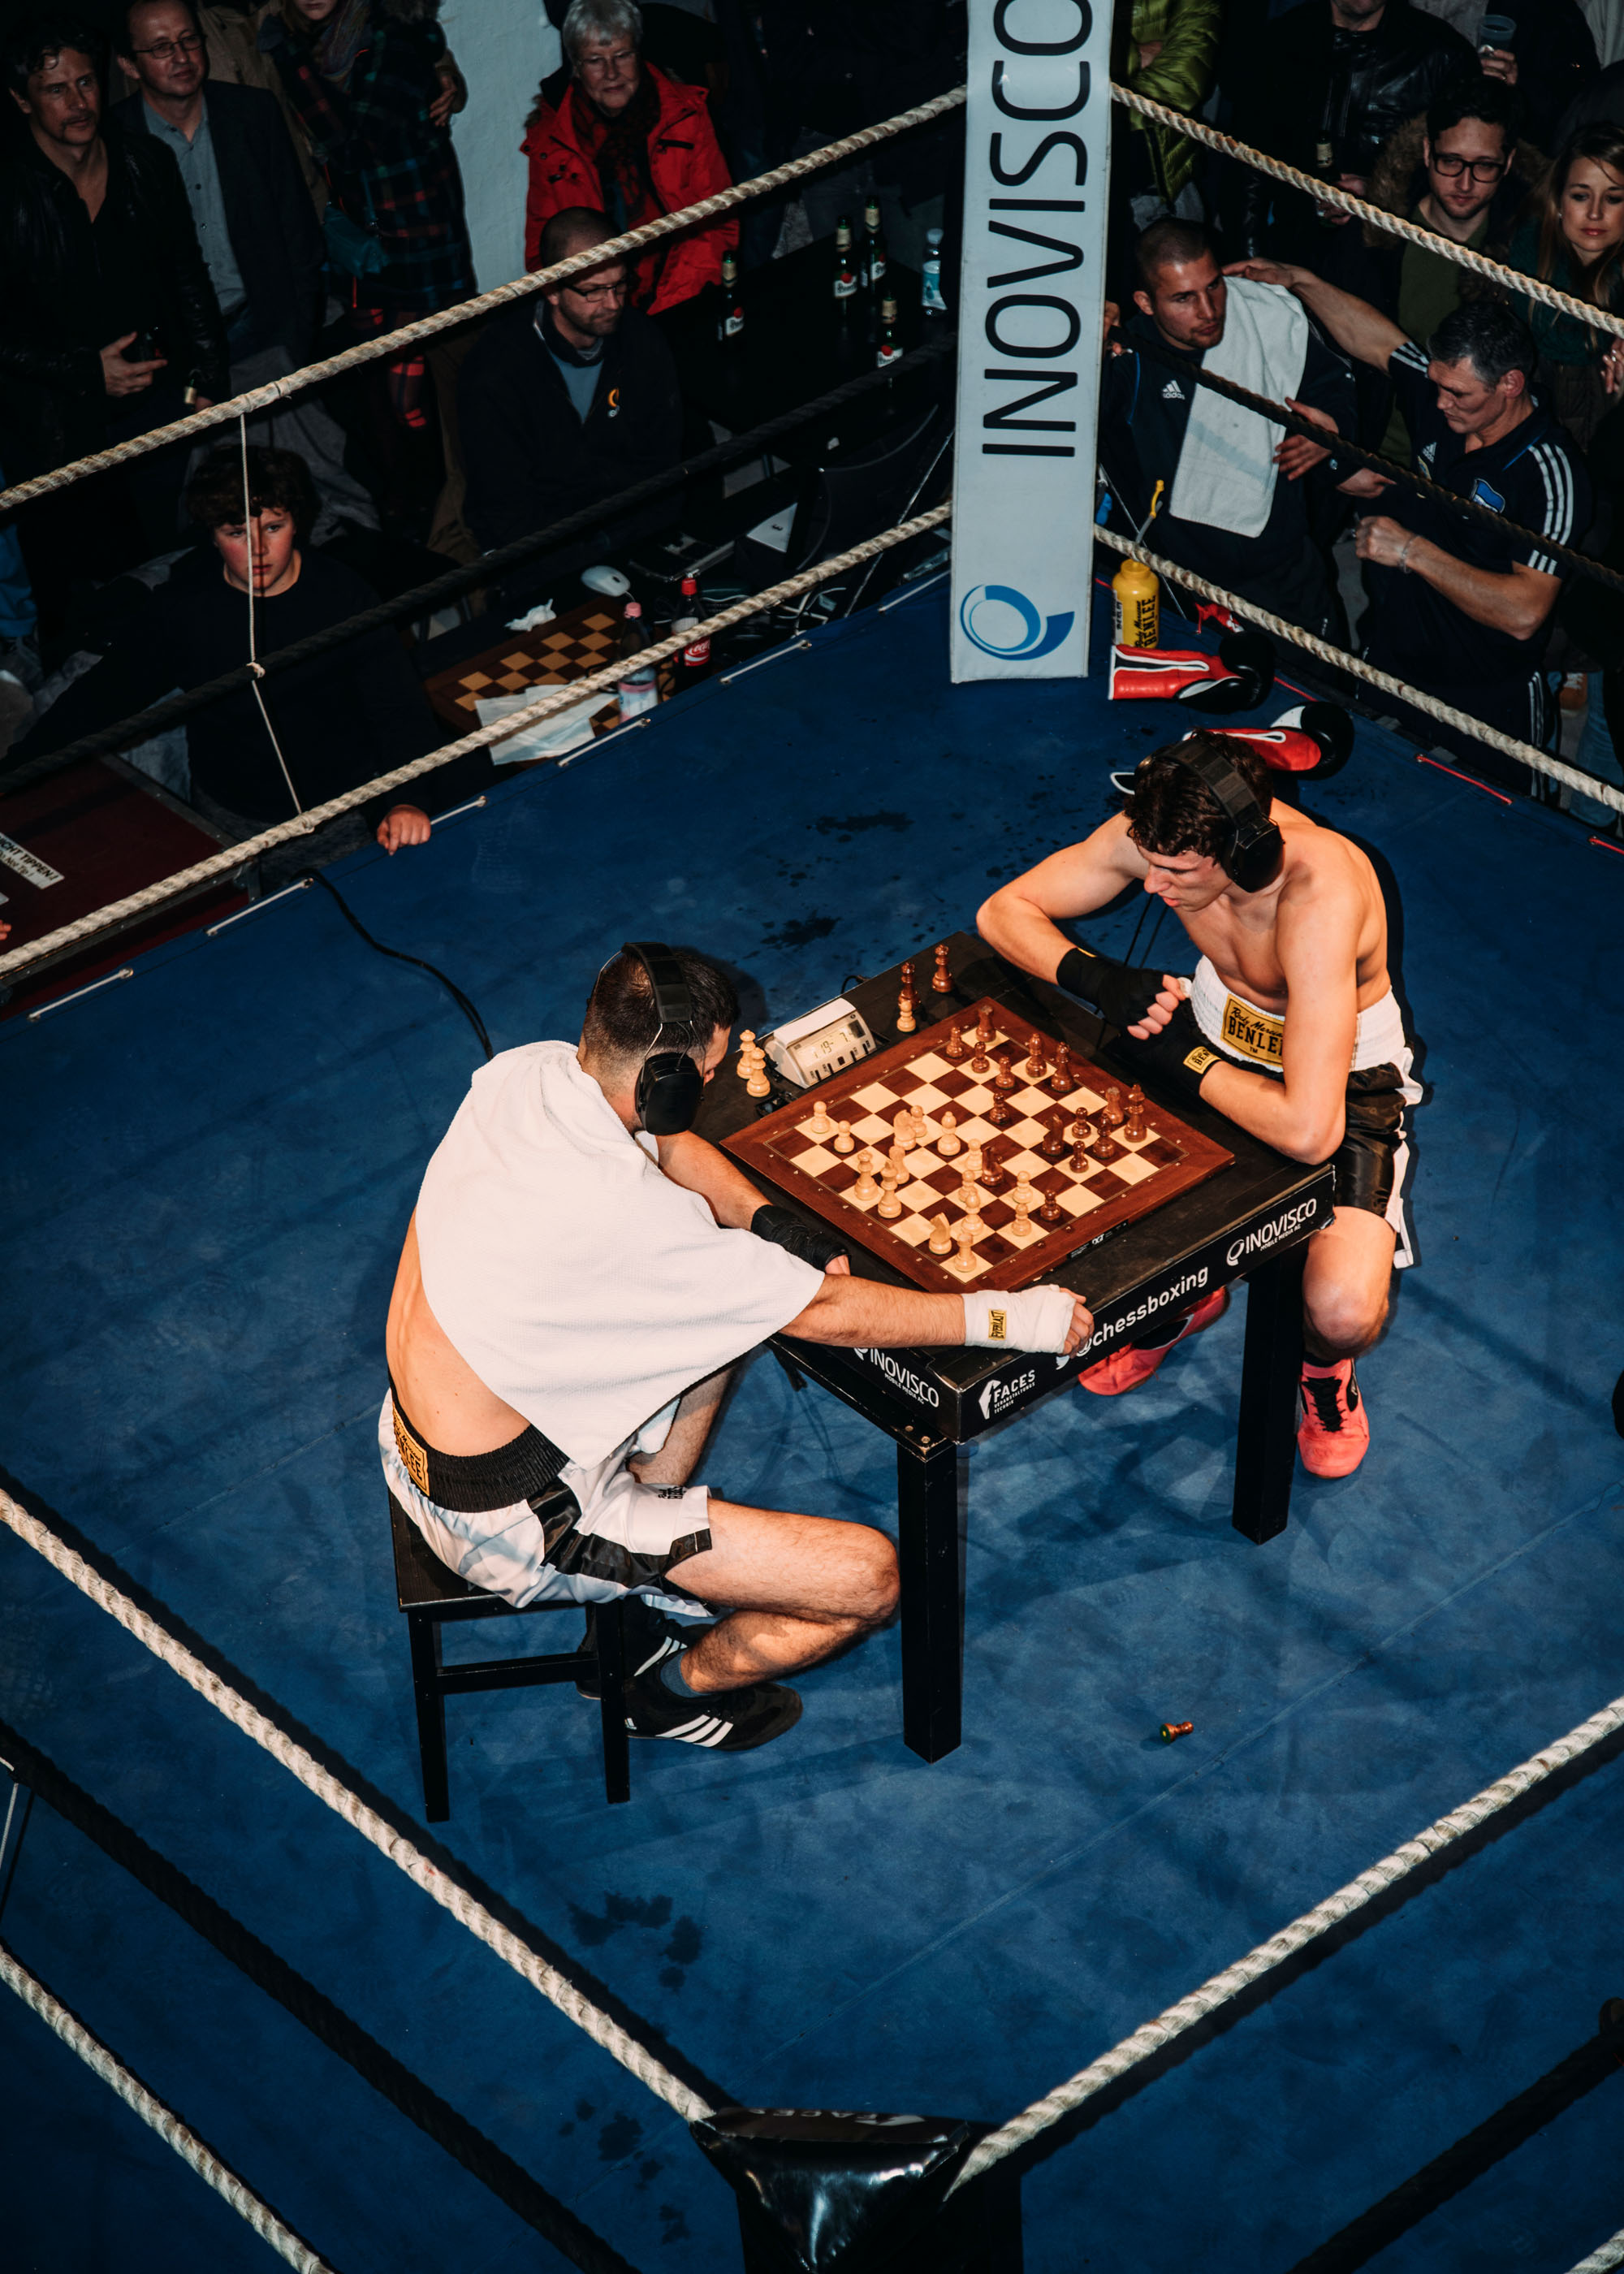 #editorial #chess #boxing #perdiz #querida #berlin